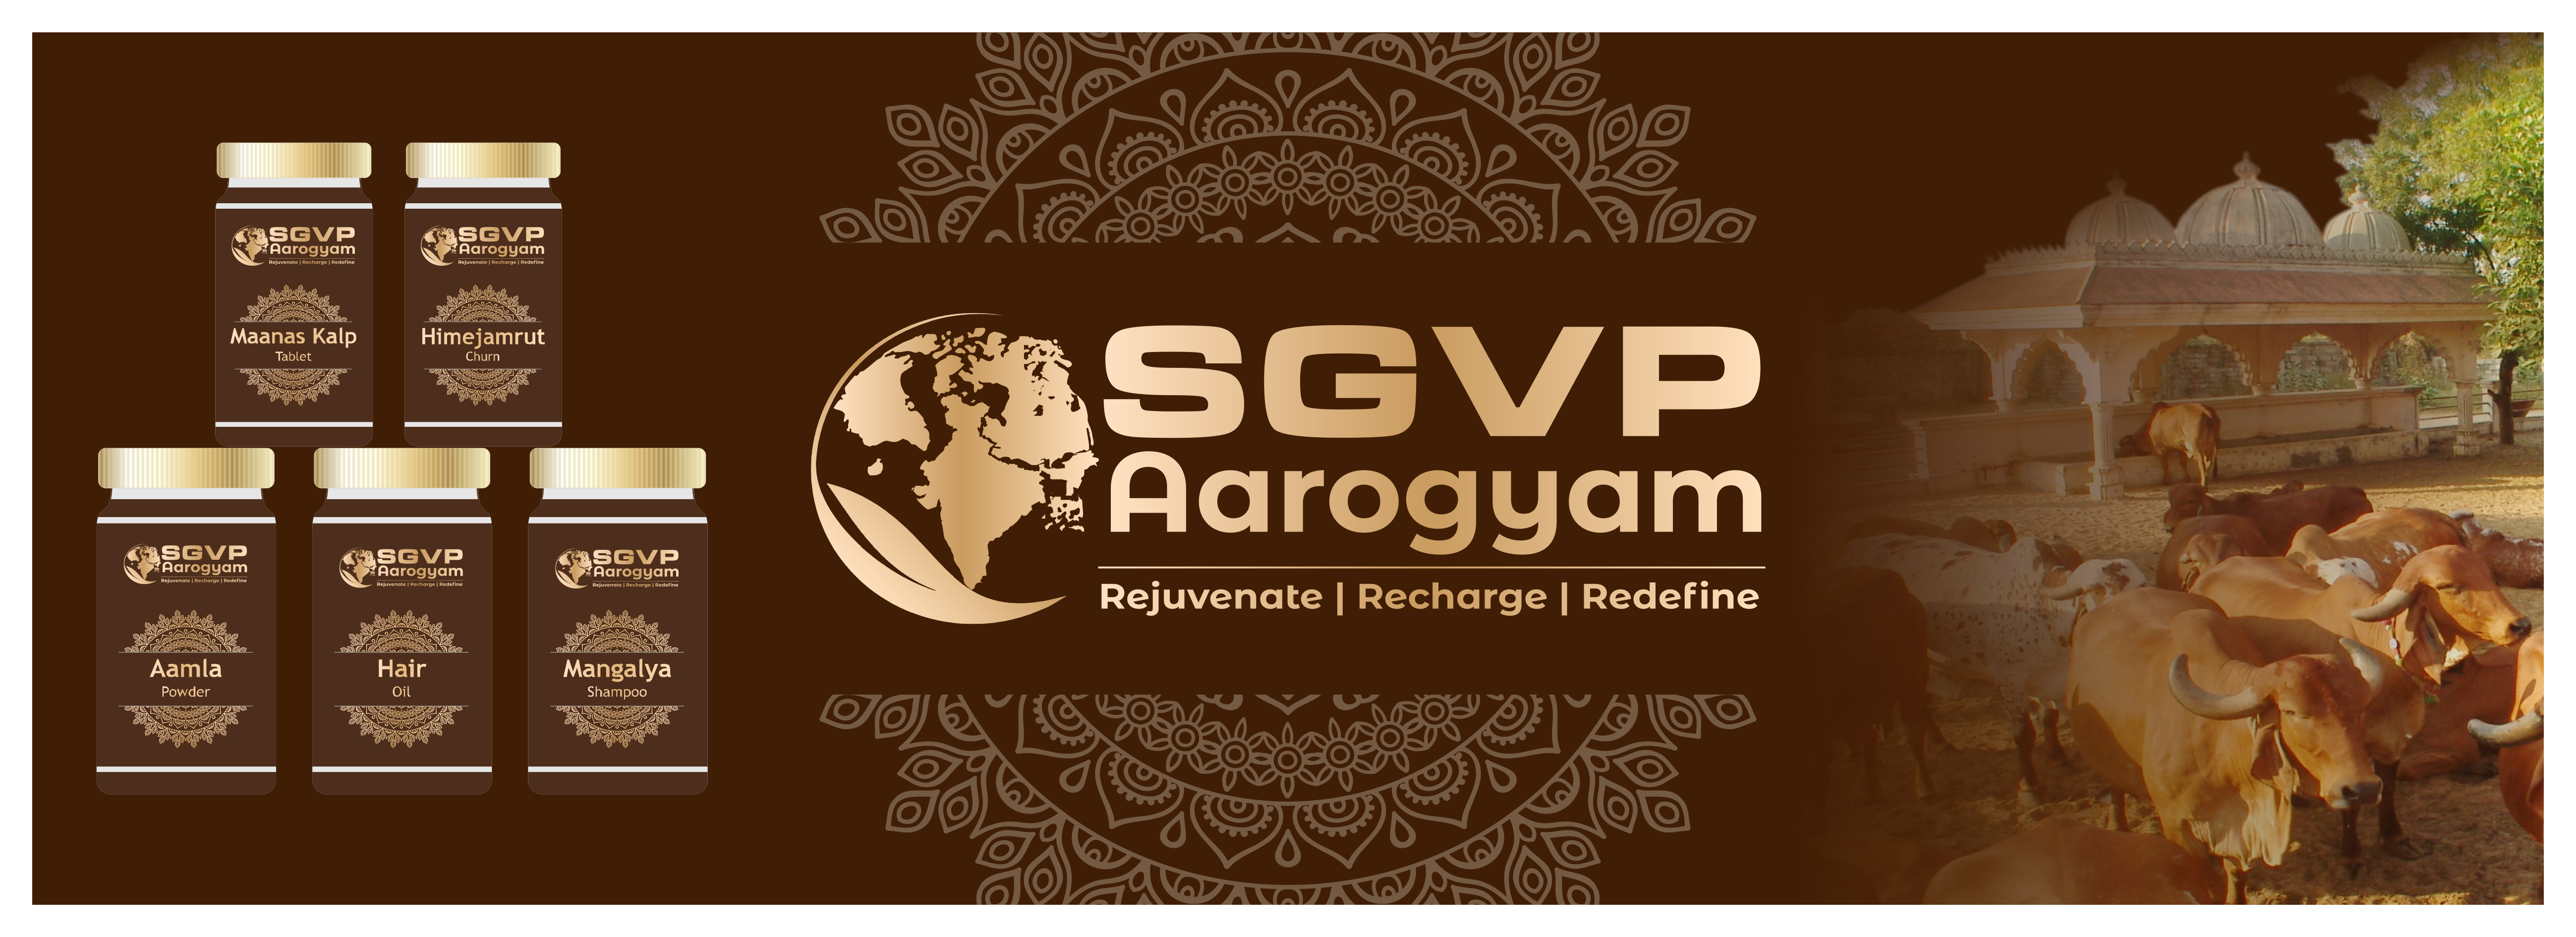 SGVP Aarogyam